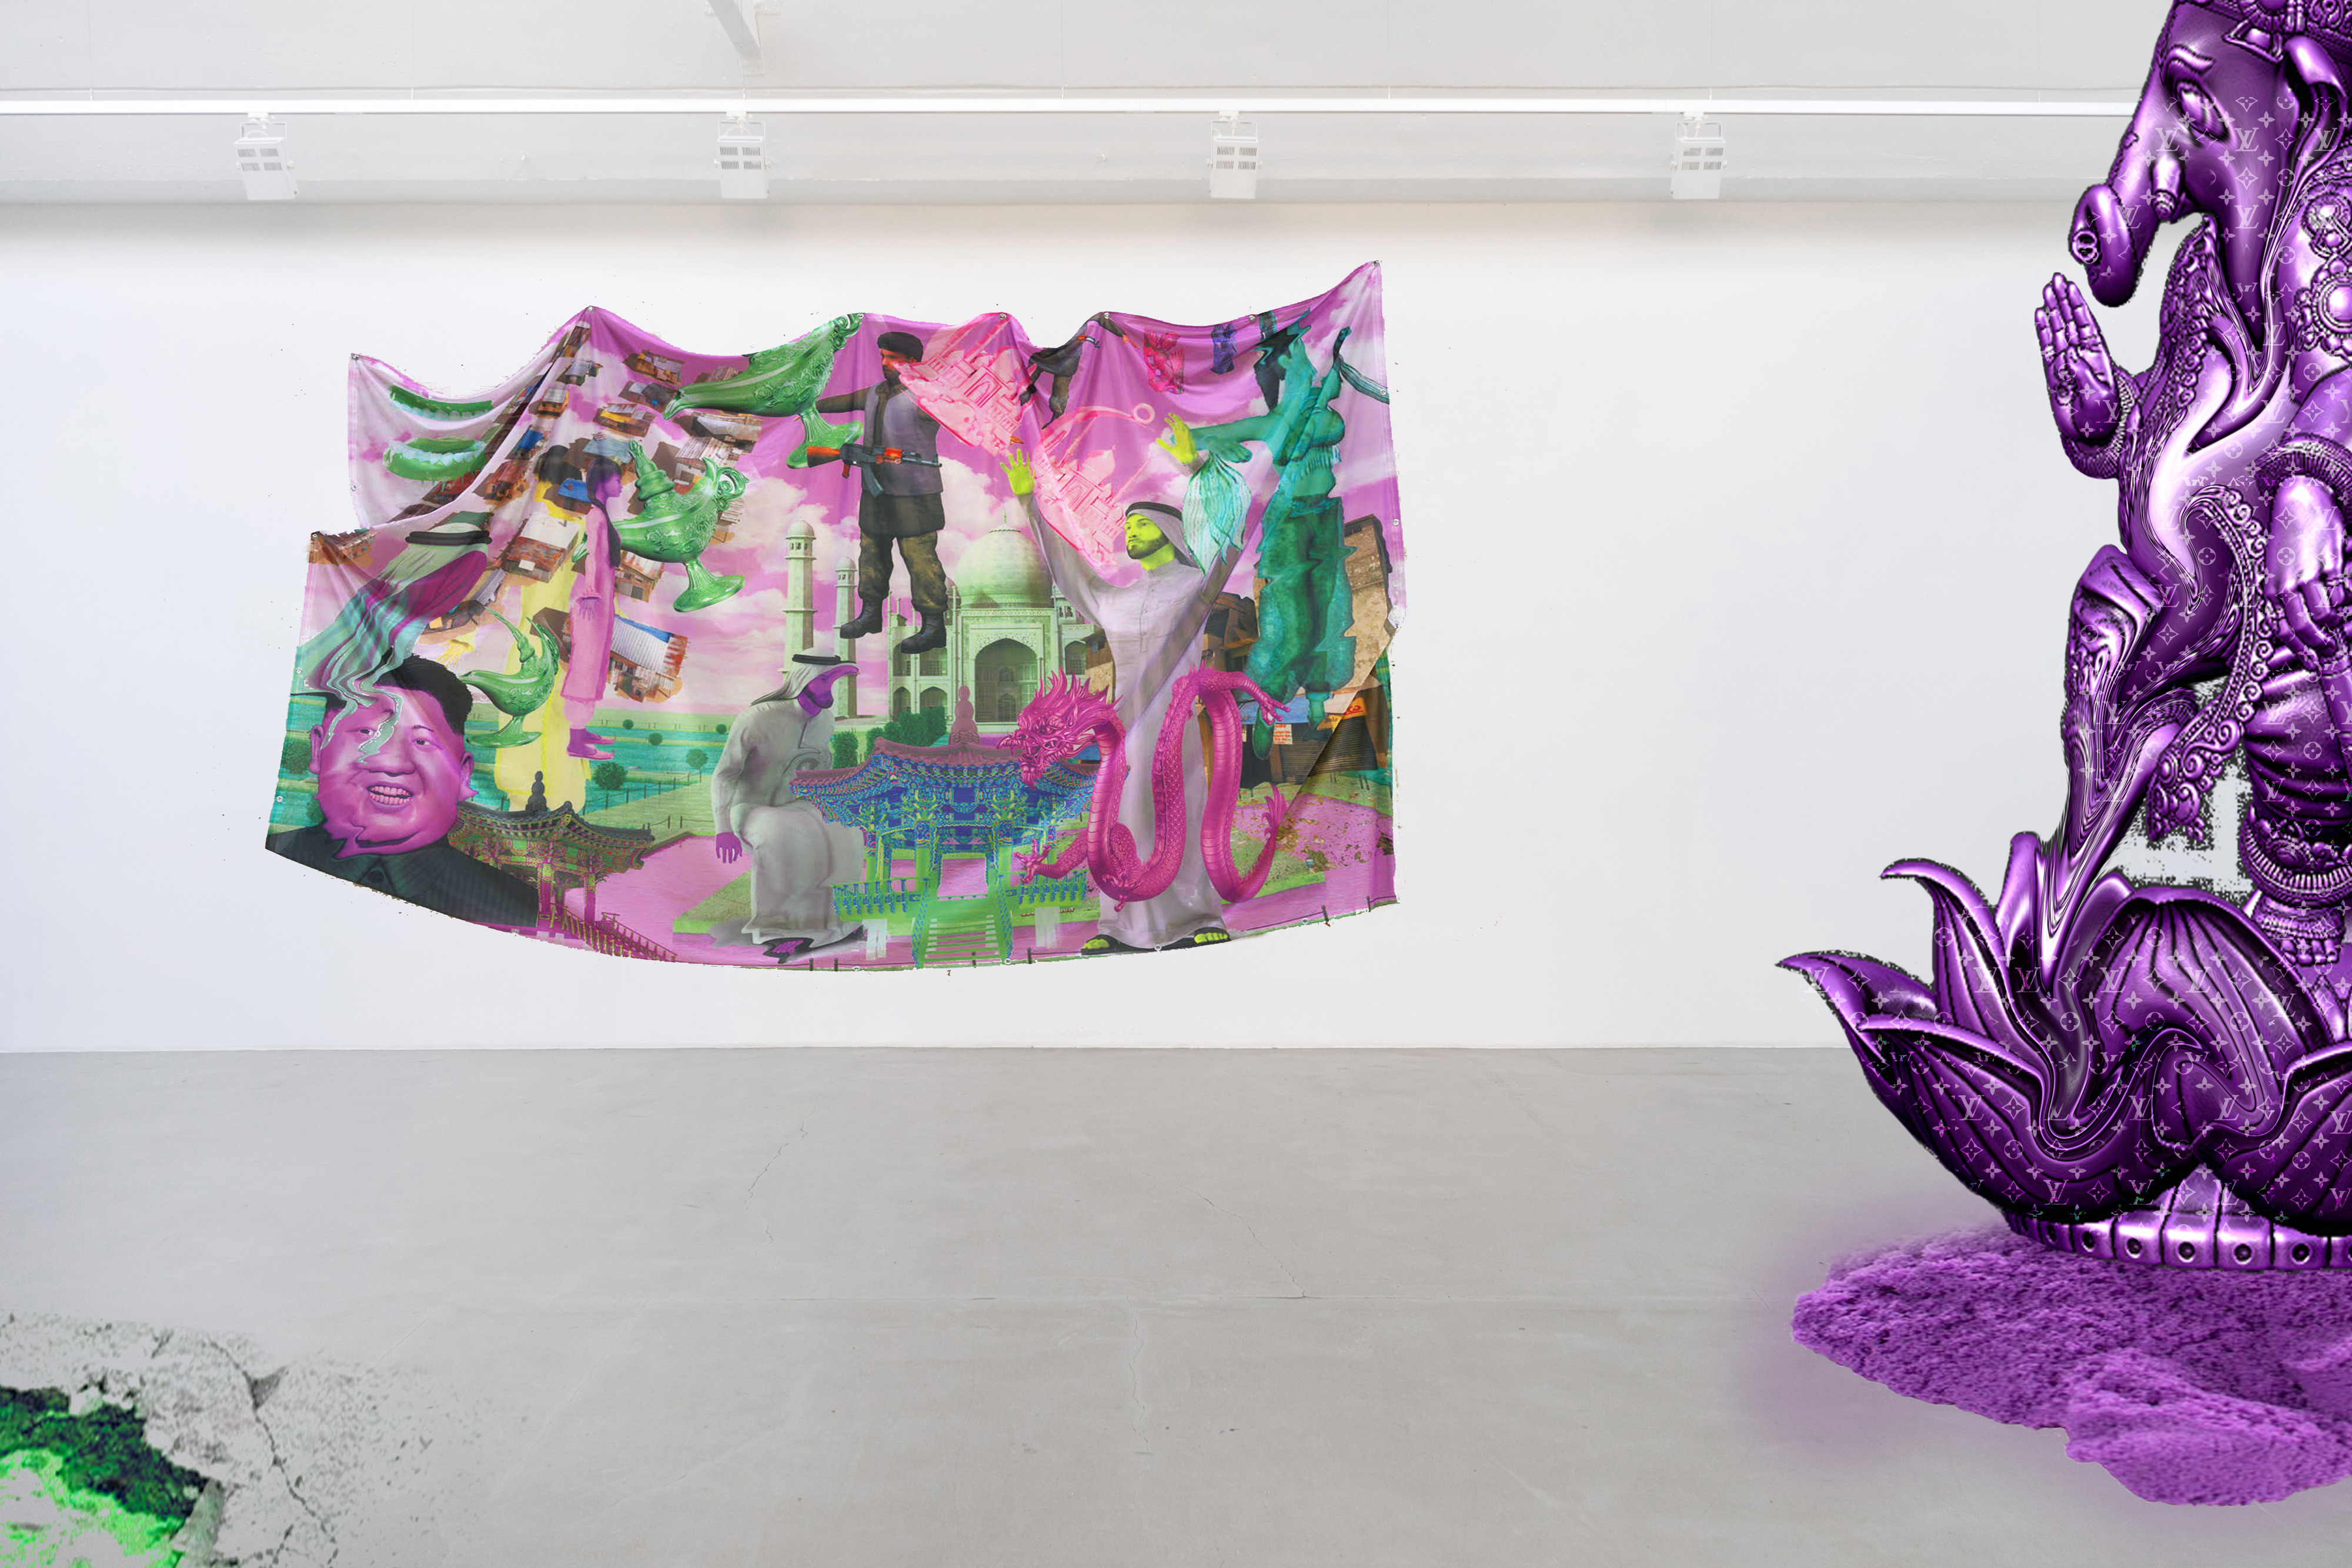 Galerie Barbara Thumm \ New Viewings #8 \ Marta Vovk